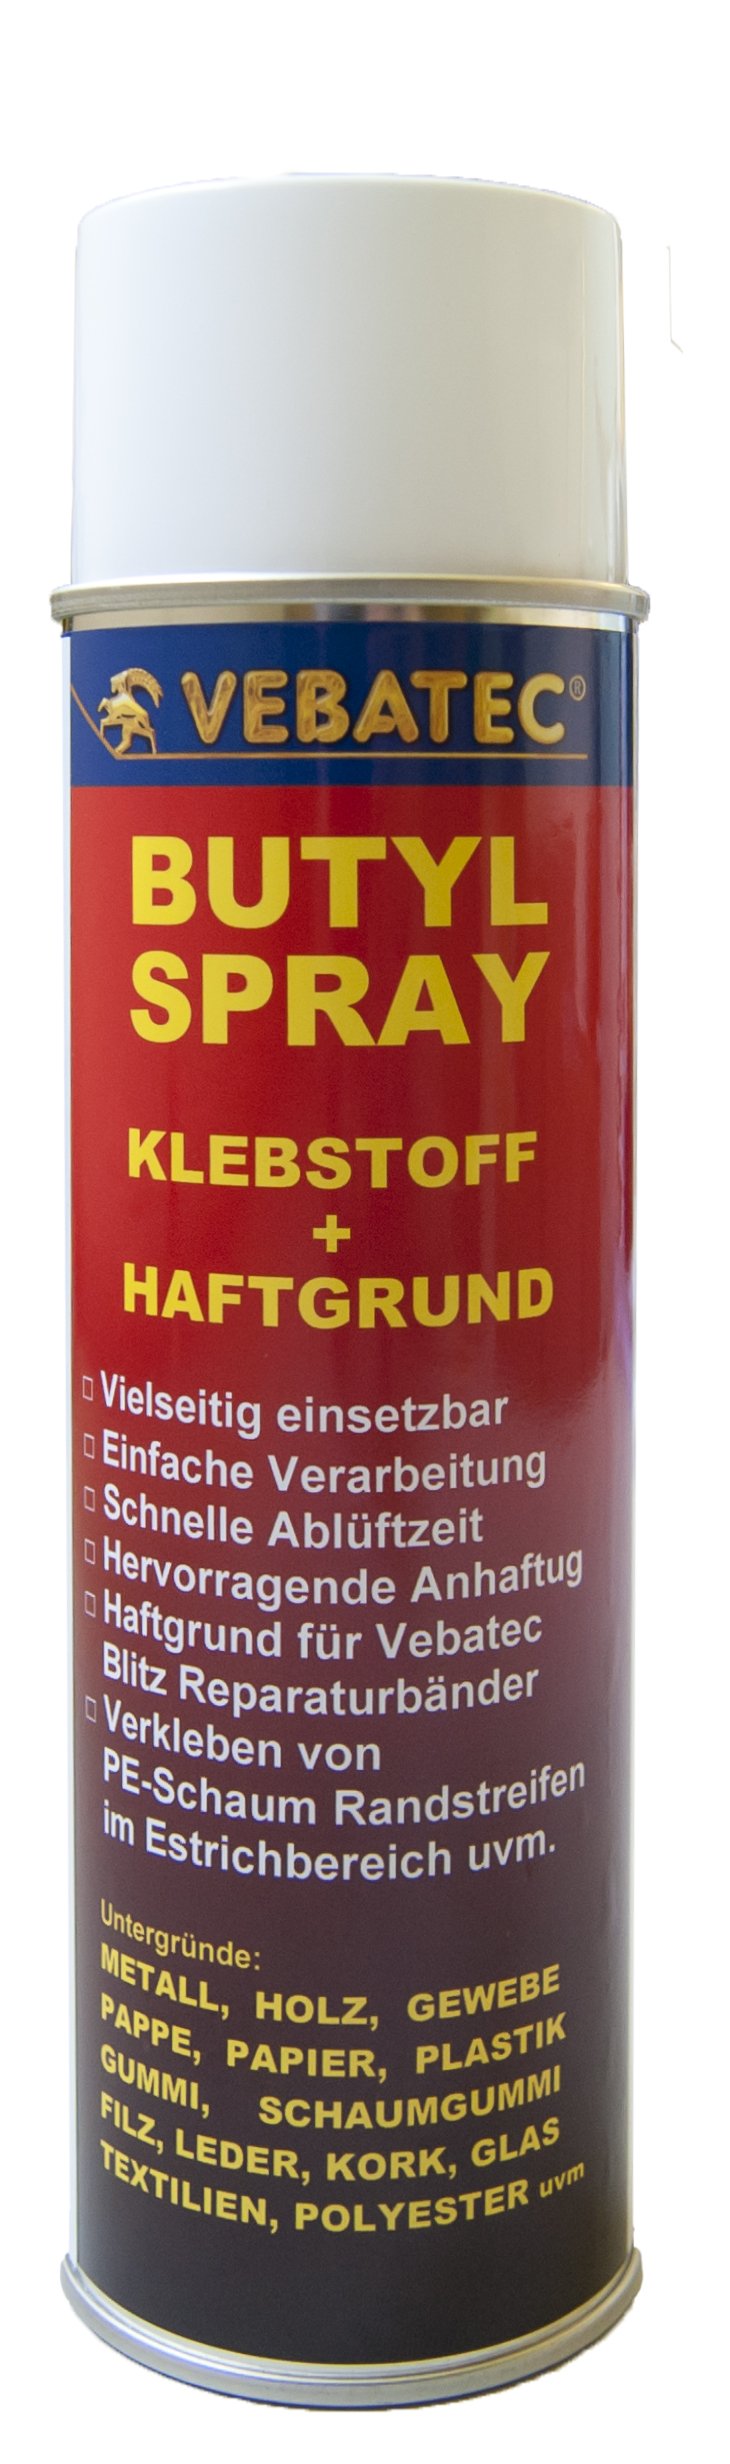 Vebatec - Klebstoff Butyl Spray 500 ml von Vebatec